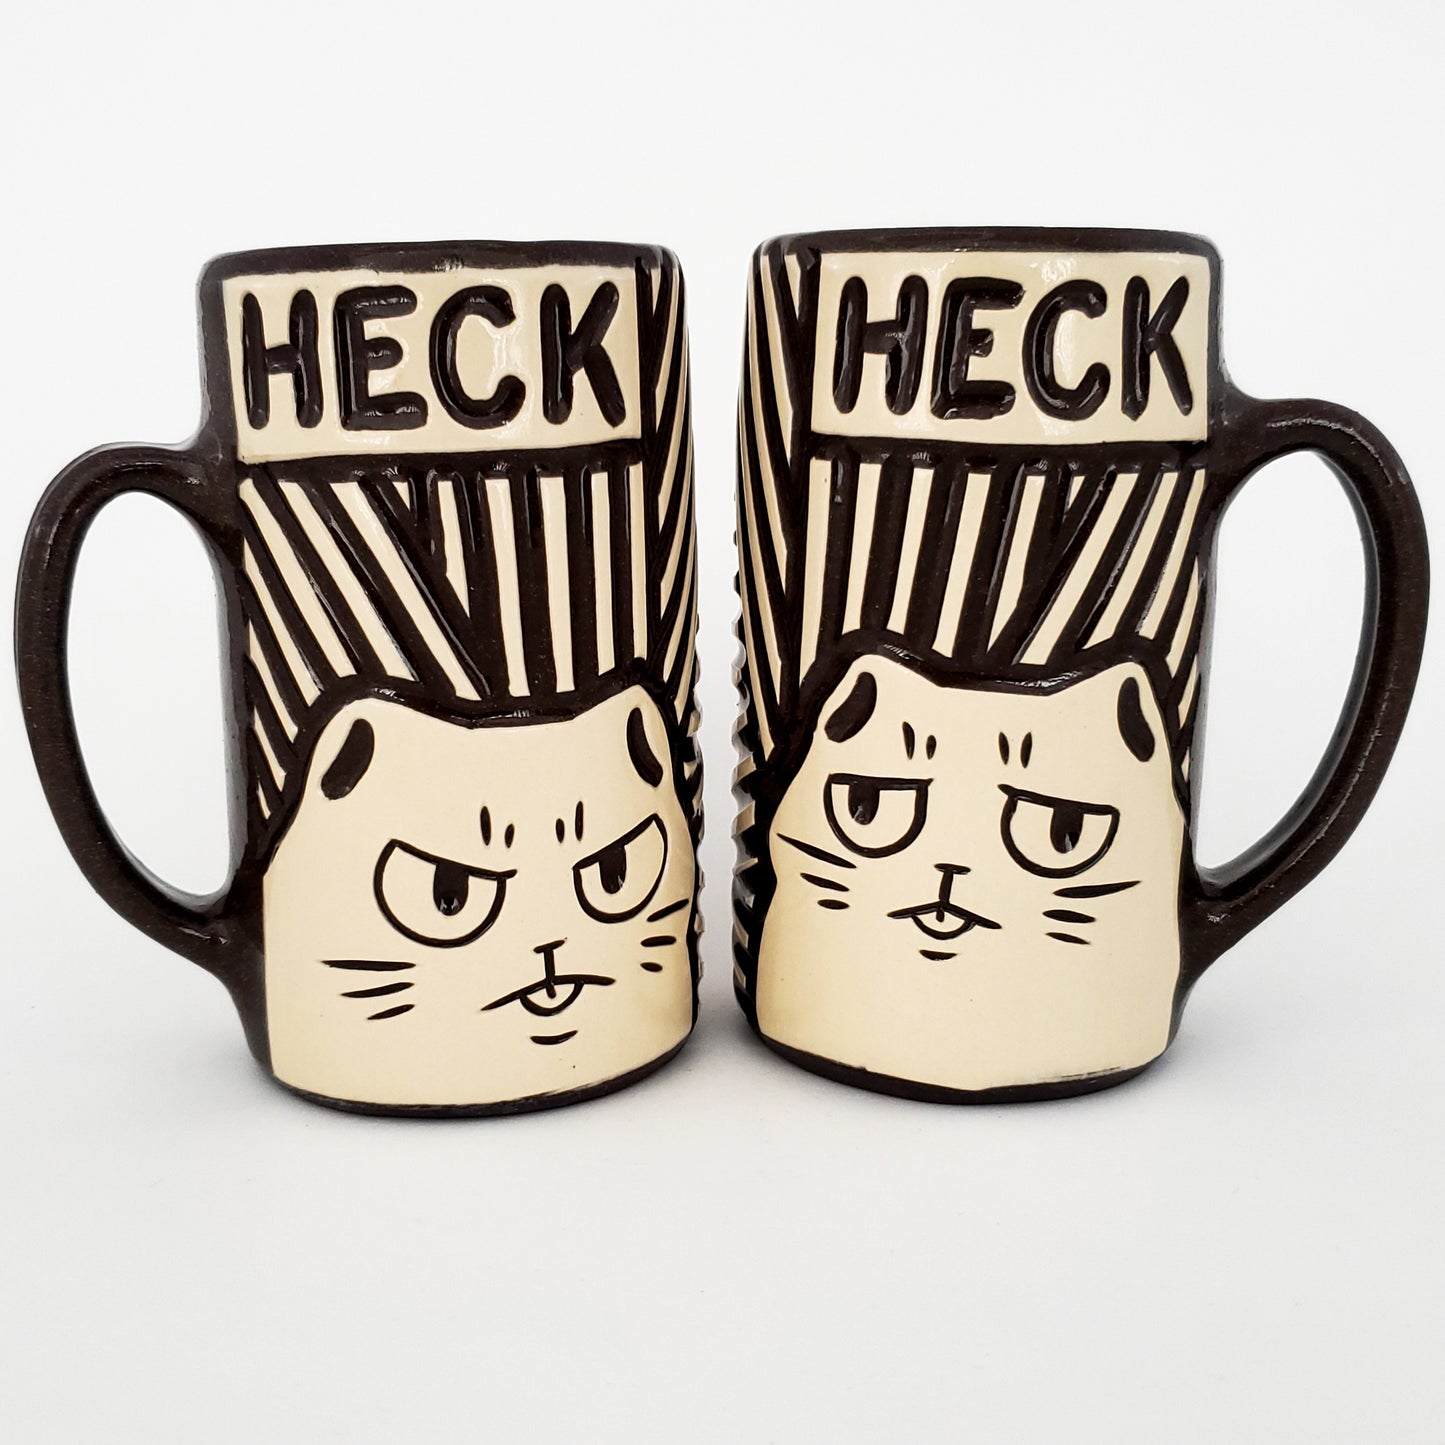 16 oz Heck Cat Mug in Coffee*